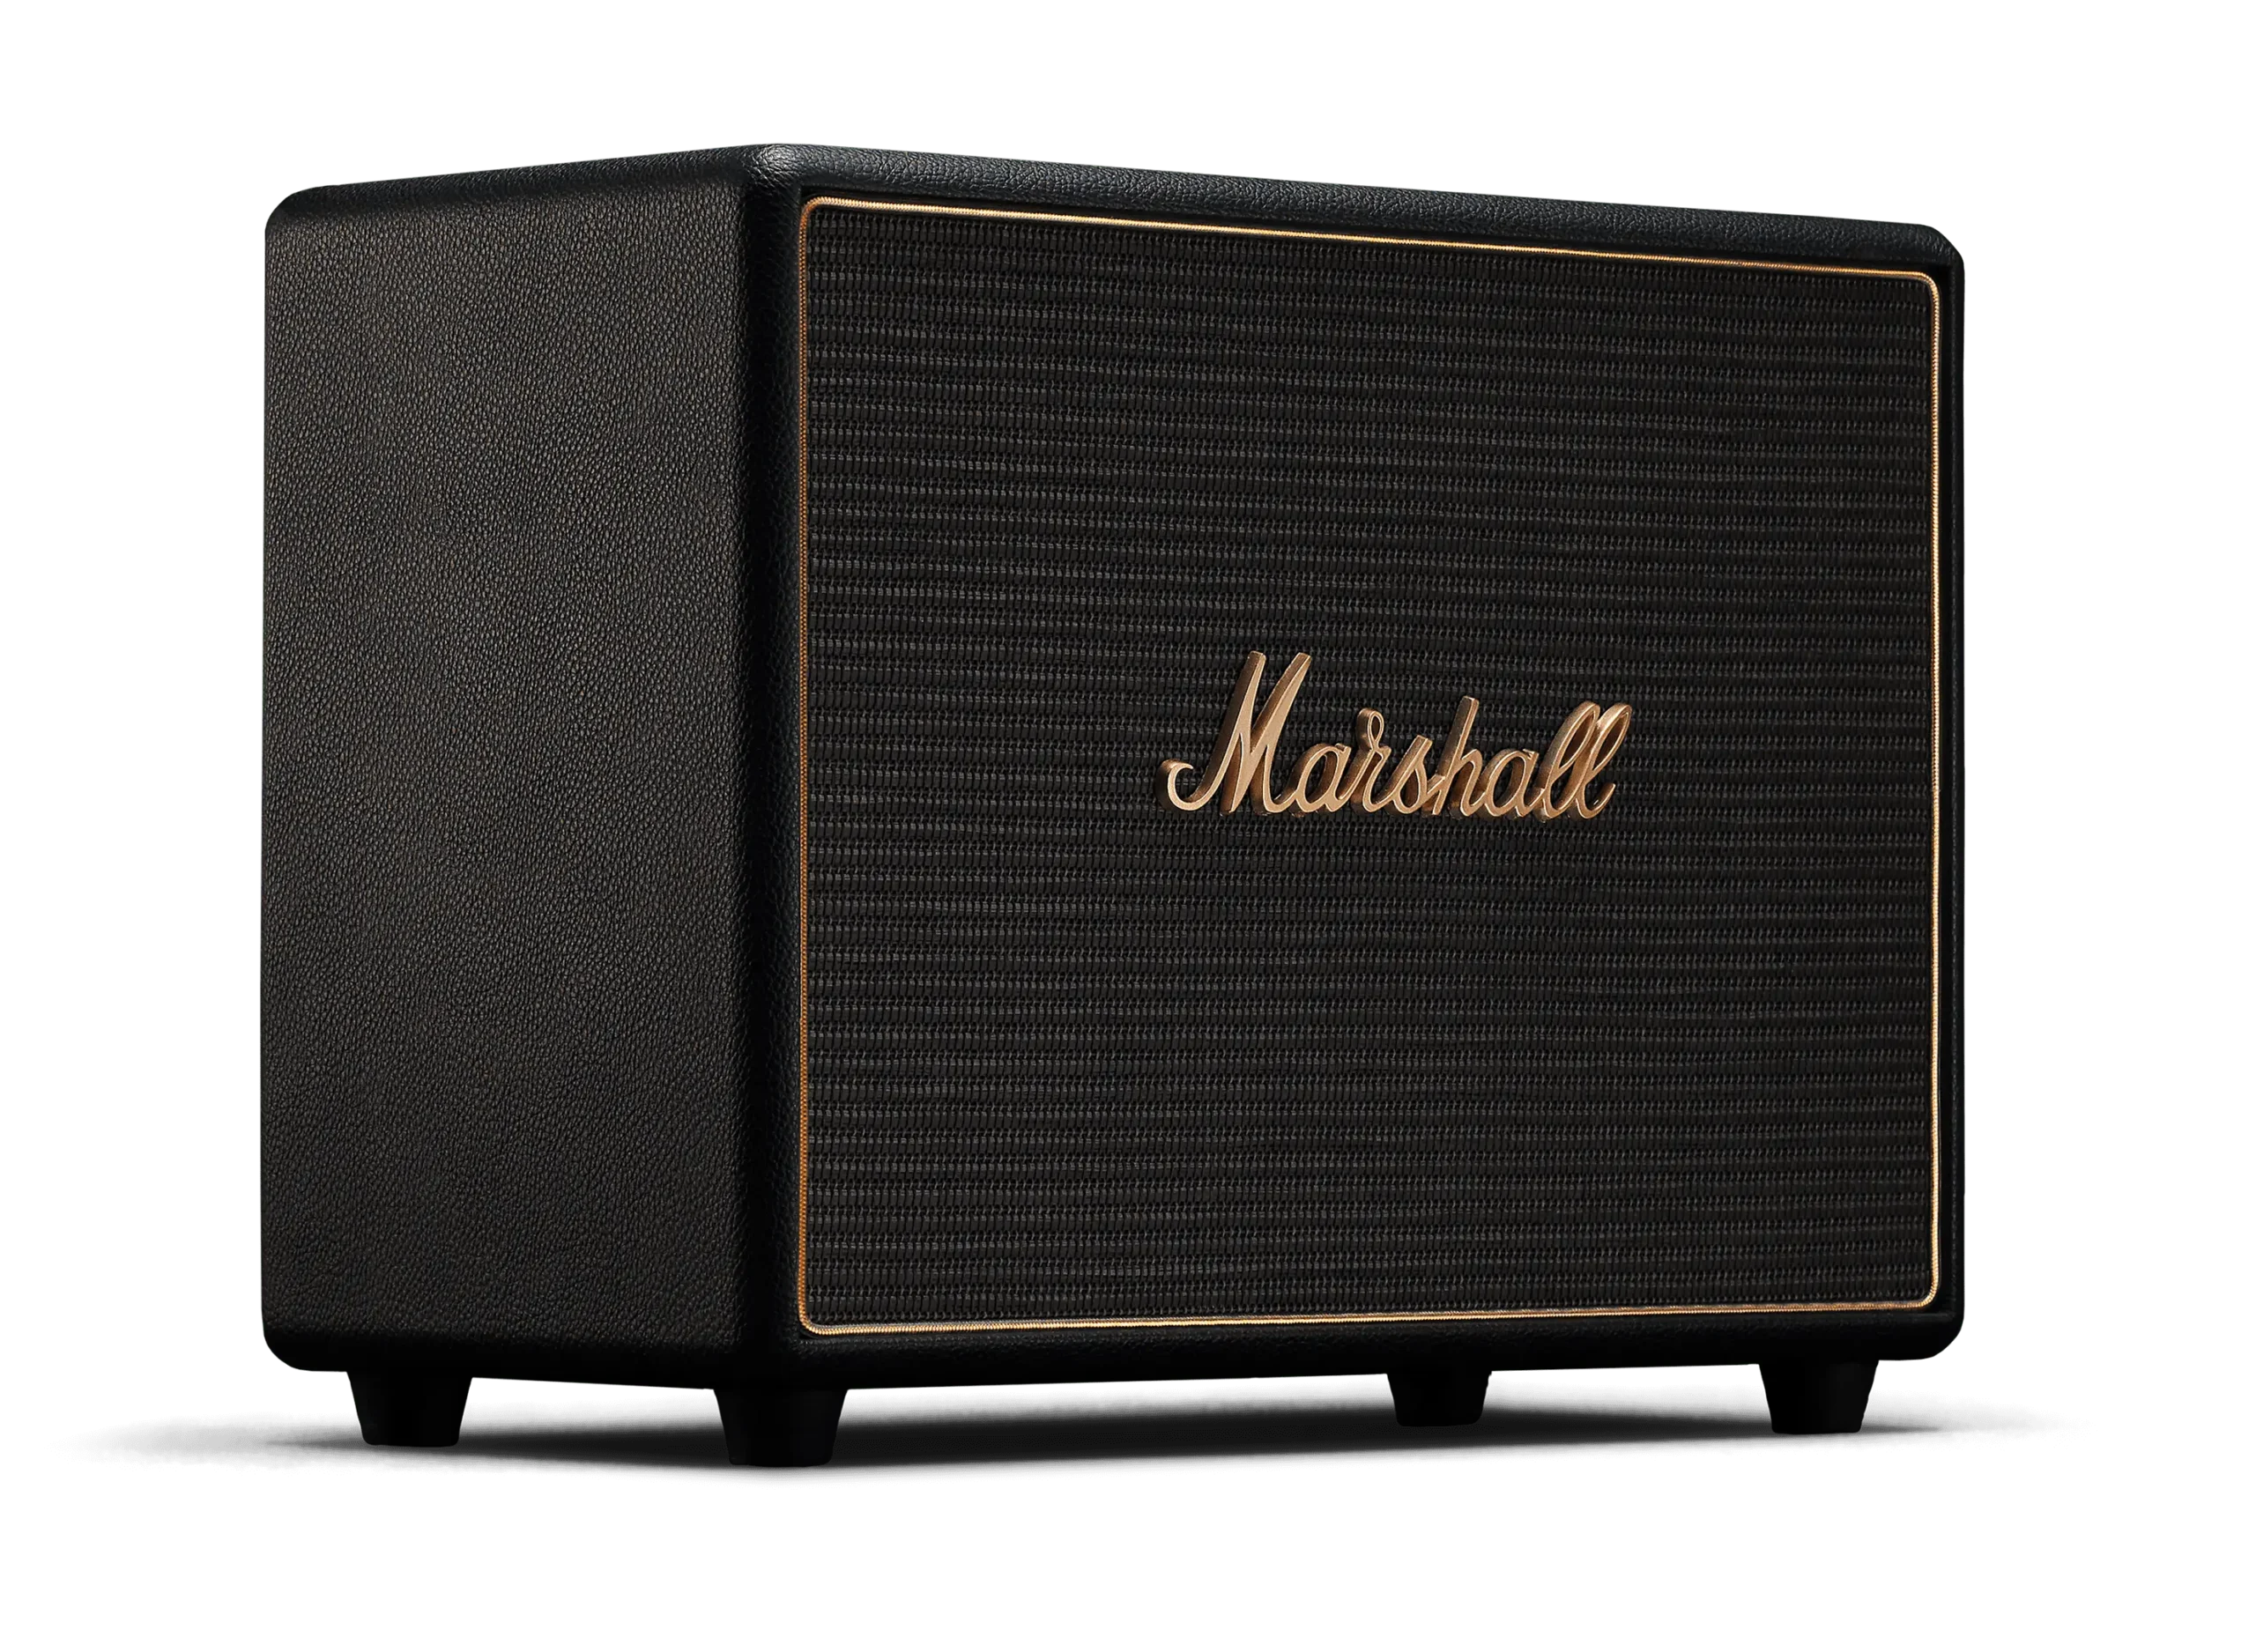 głośnik marshall radio - Ile kosztuje duży głośnik Marshalla